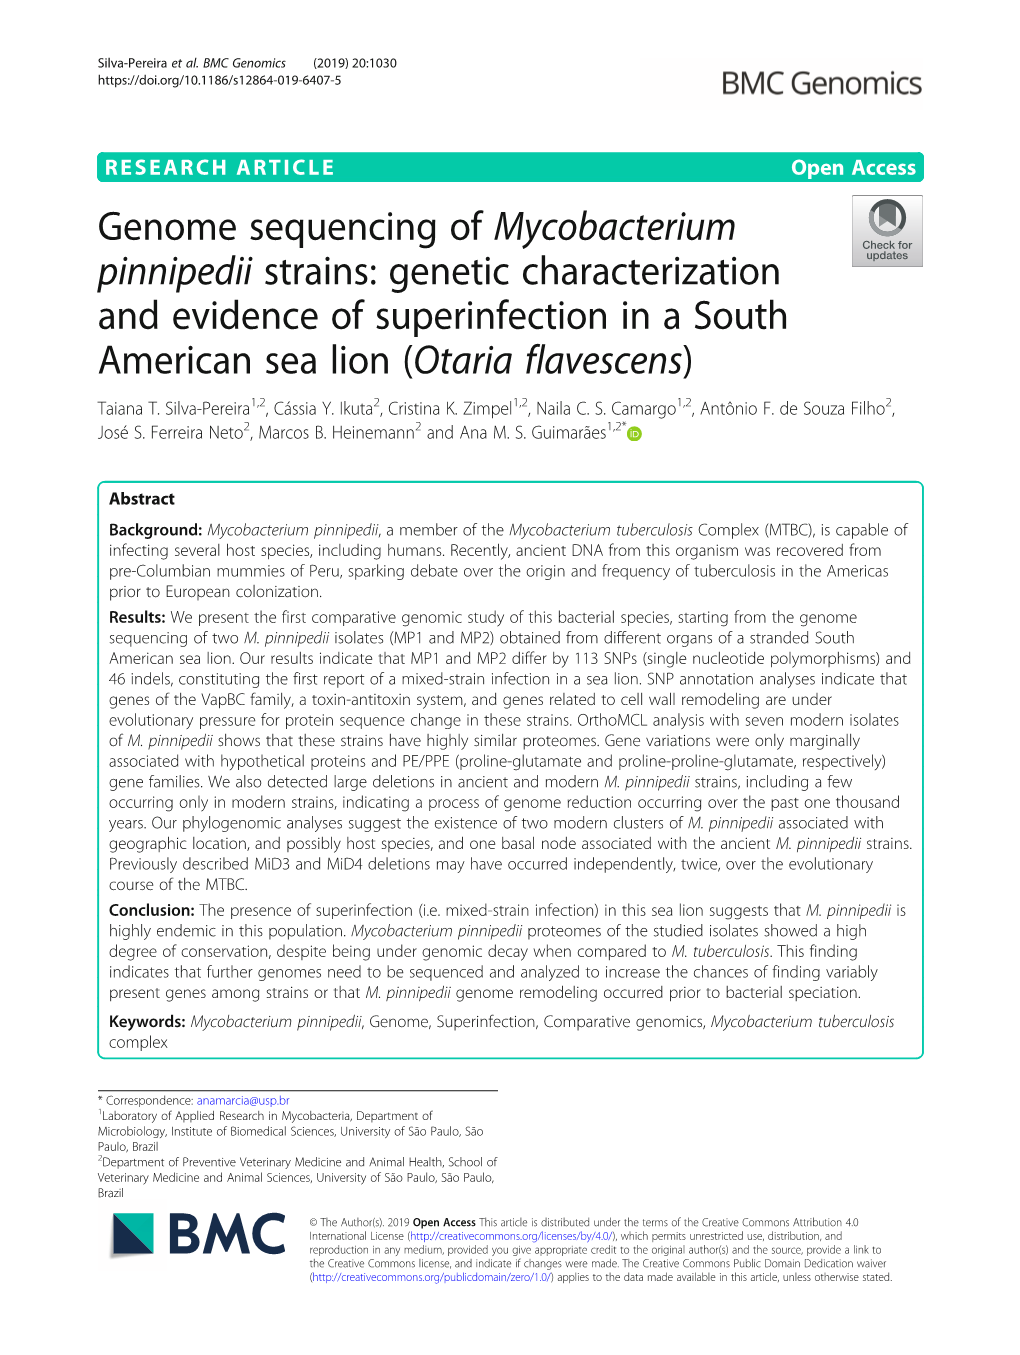 Genome Sequencing of Mycobacterium